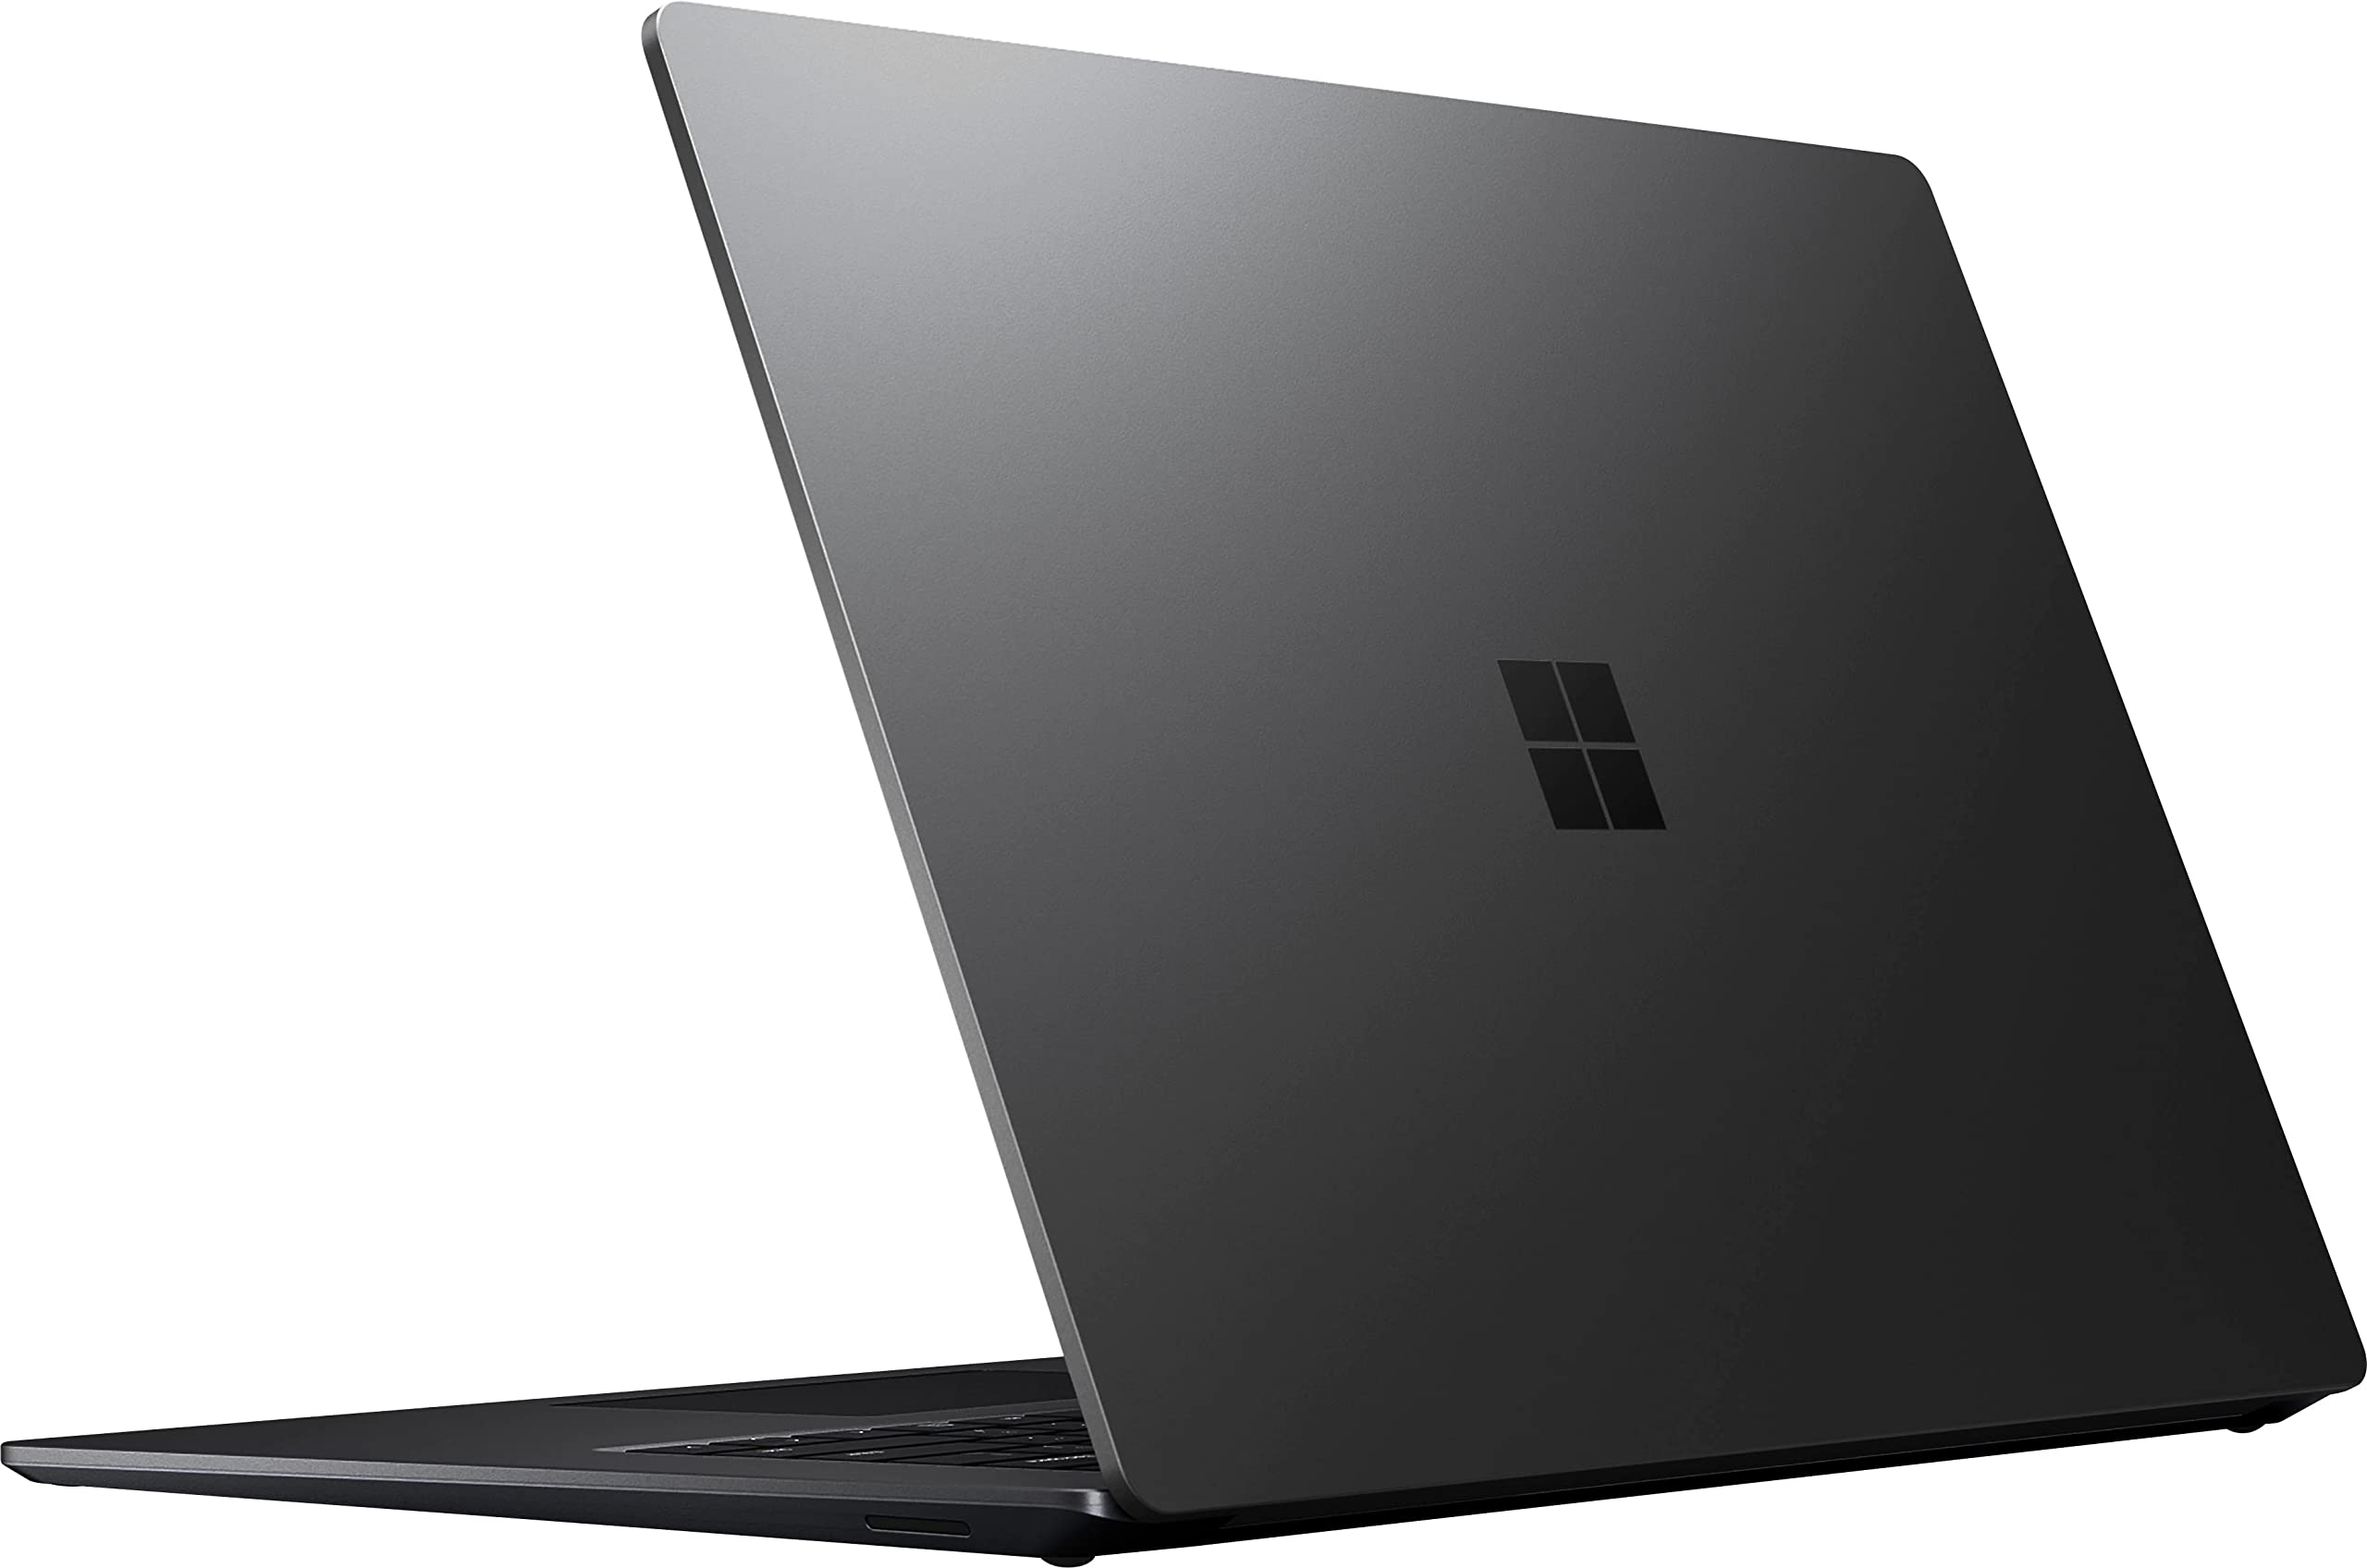 Microsoft Surface Laptop 4 13.5" Touchscreen (11th Gen Intel Core i7-1135G7 for Multi-Tasking, 16GB DDR4 RAM, 256GB NVMe SSD) Ultra-Thin and Light, Long Battery Life, Windows 10 Pro, Black (Renewed)